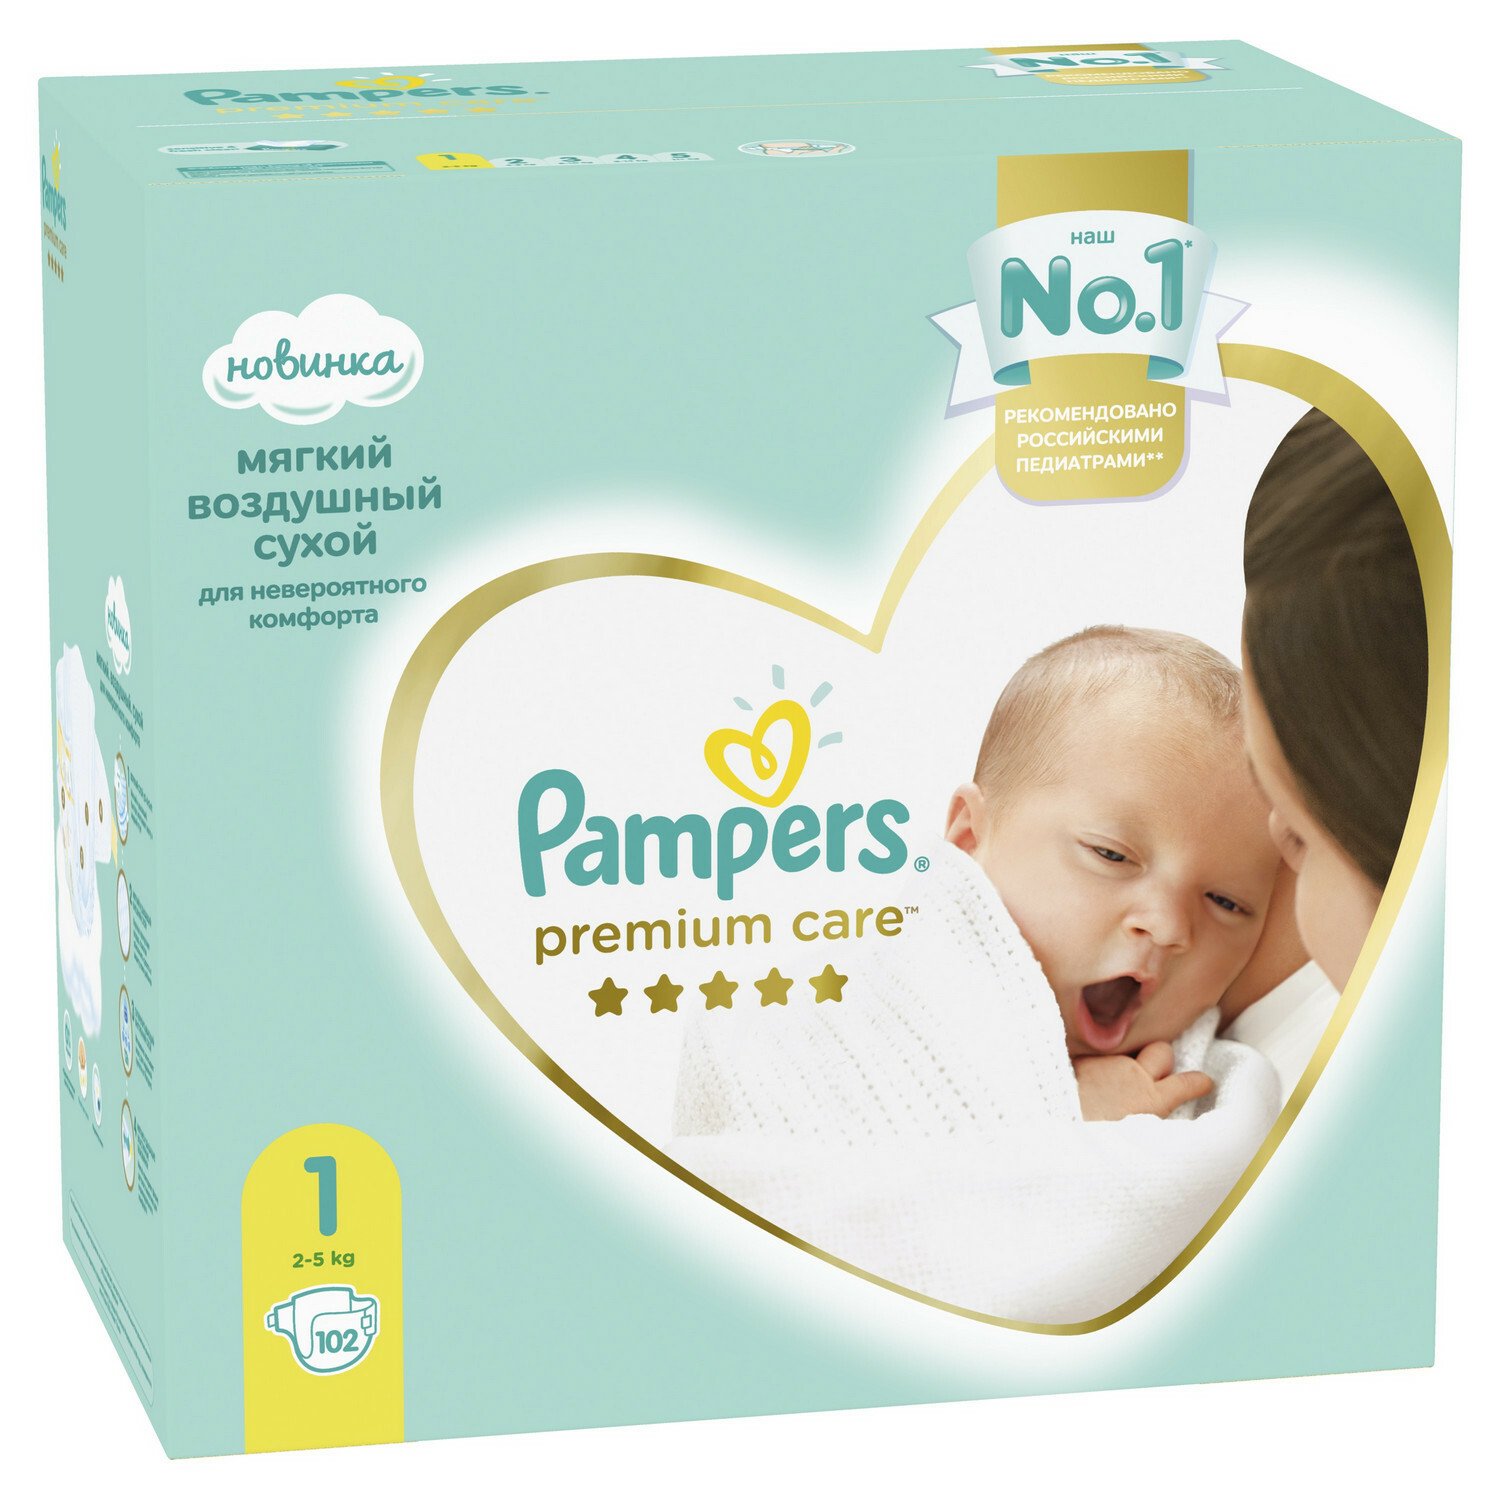 Подгузники Pampers Premium Care Newborn 1 2-5кг 102шт